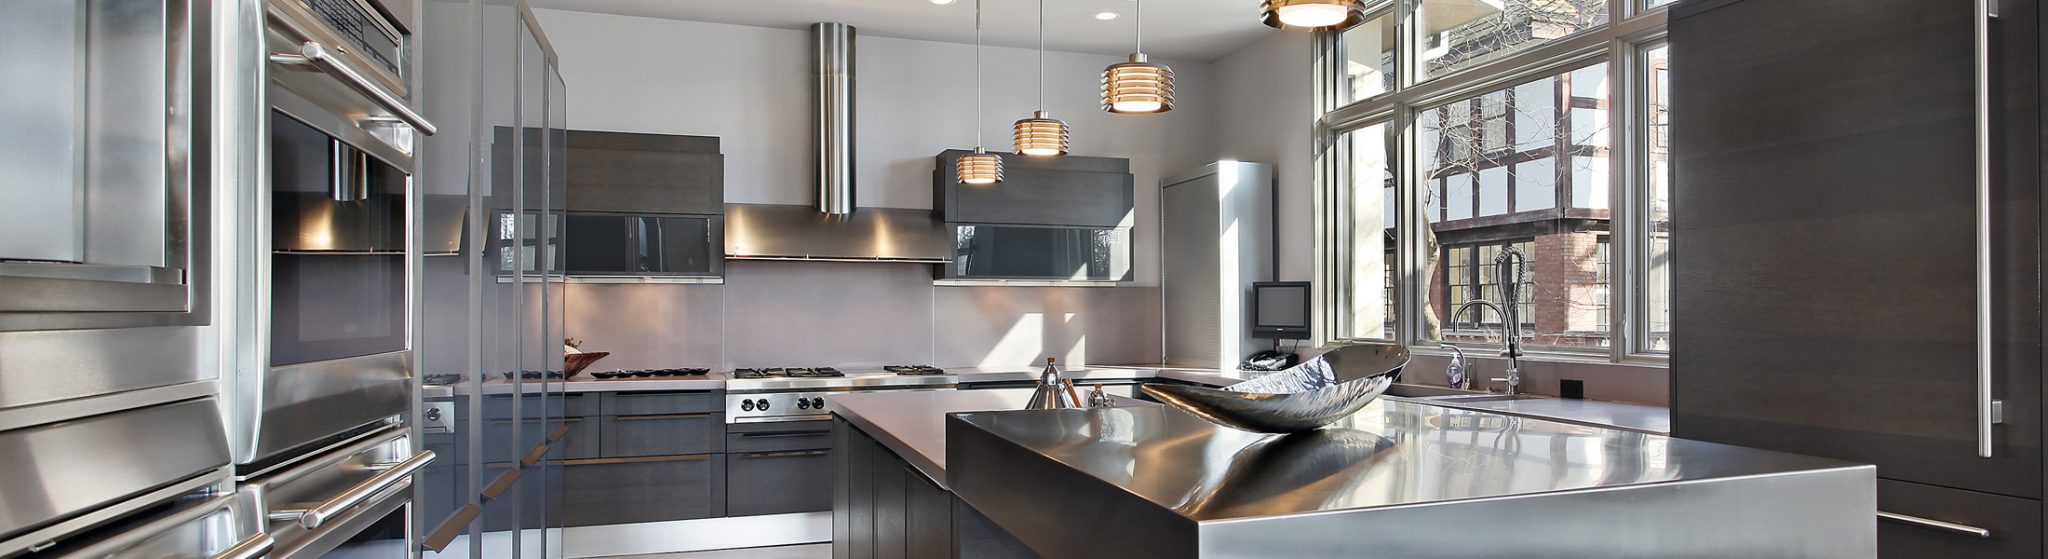 Beautiful Kitchen with Chrome Appliances